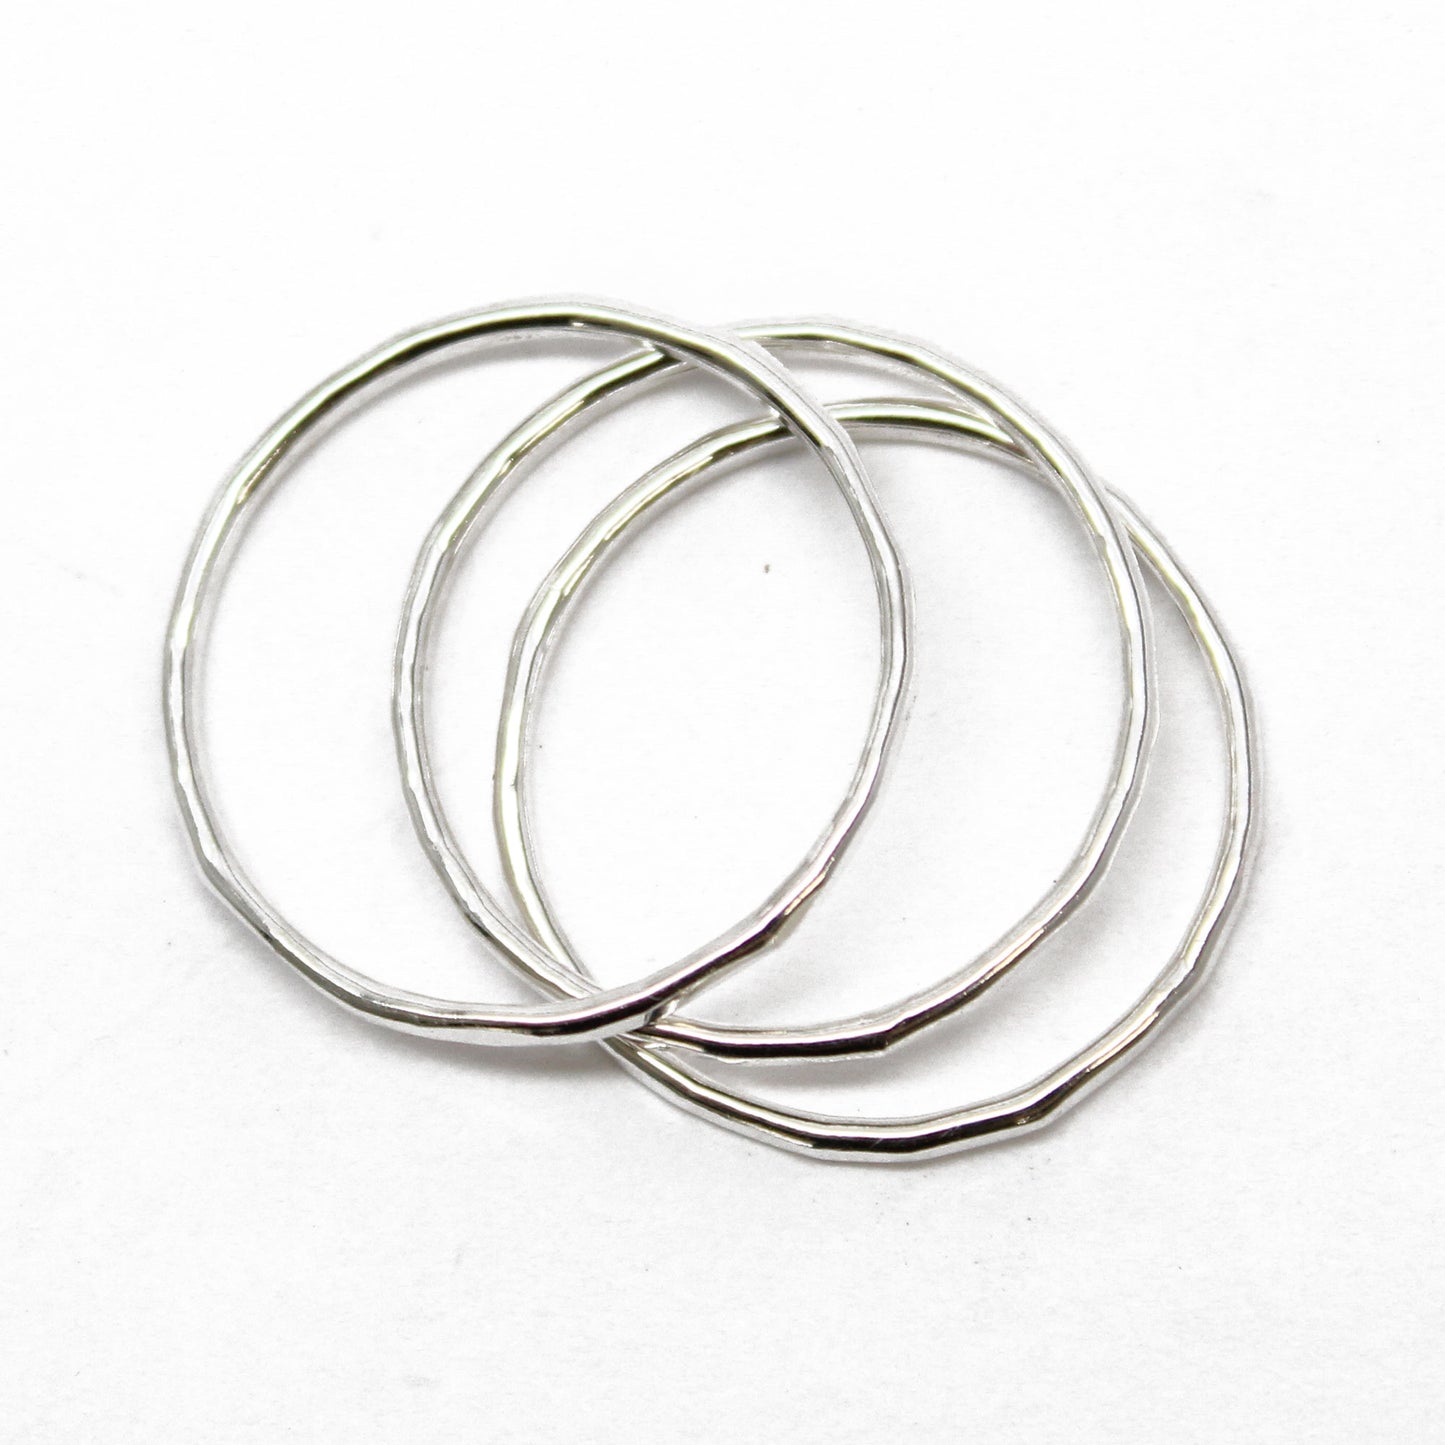 Handmade Silver Stacking Rings